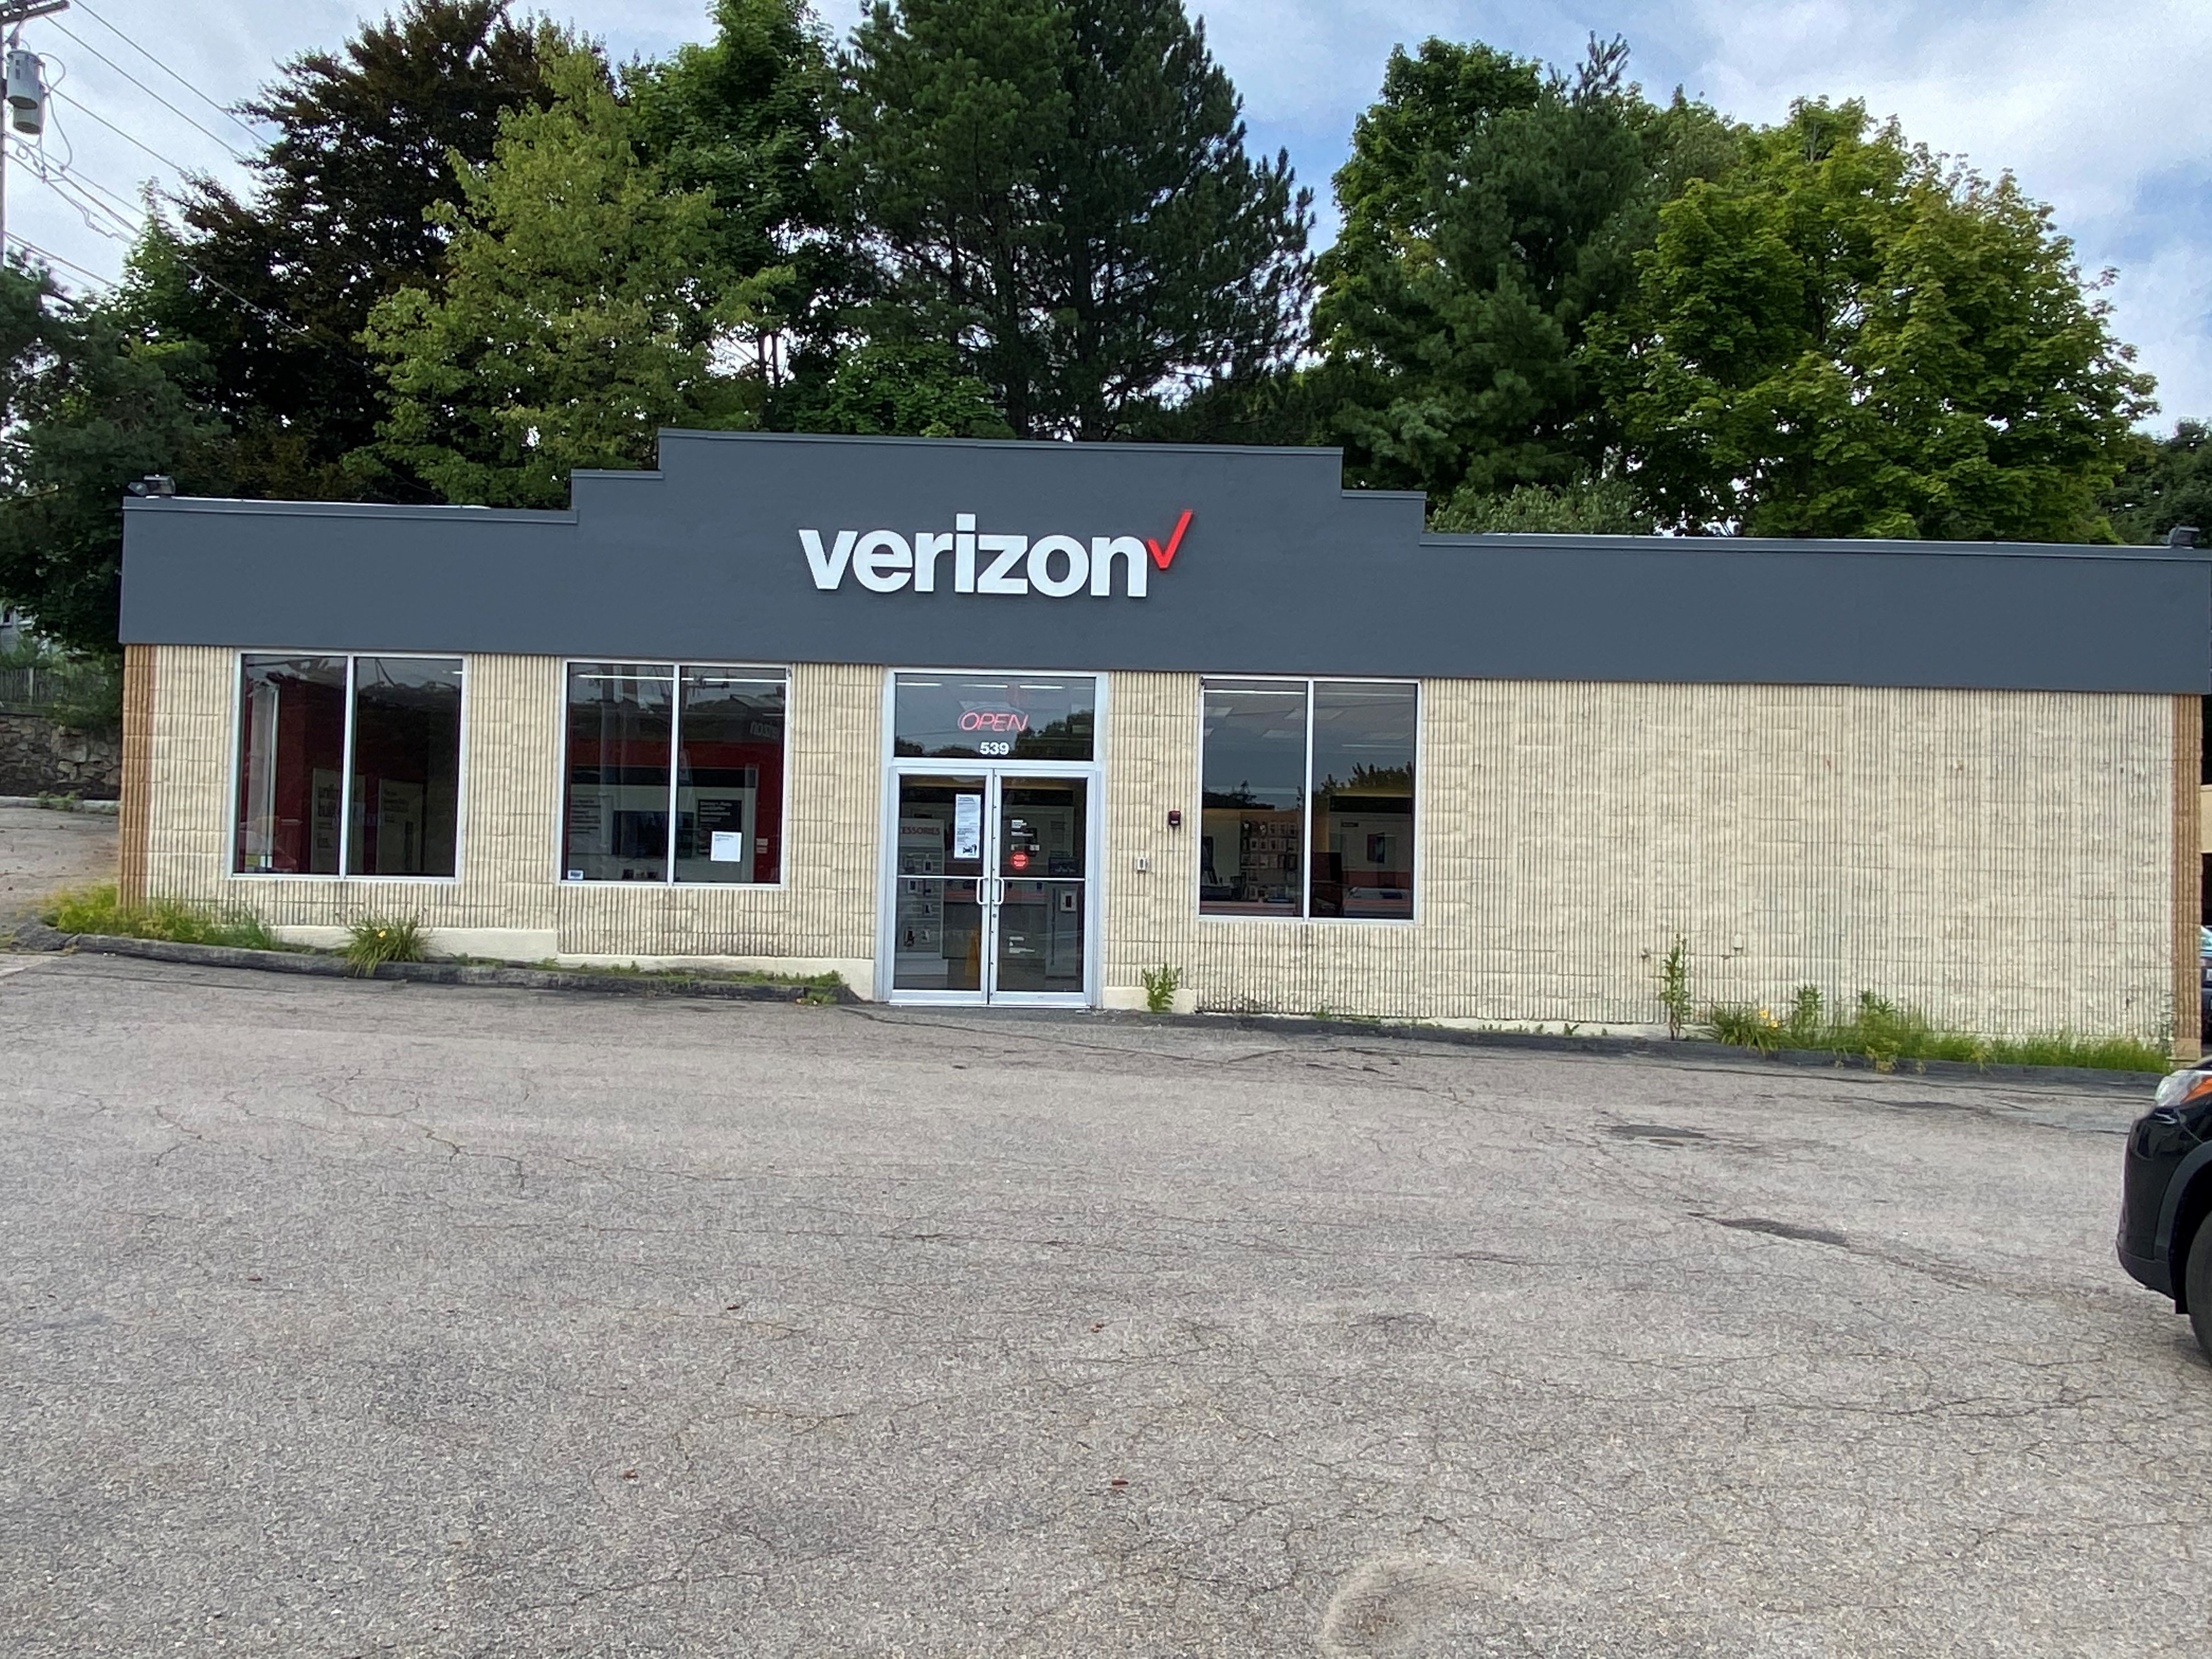 Wireless Zone®, Verizon Authorized Retailer
539 Granite St
Braintree, MA